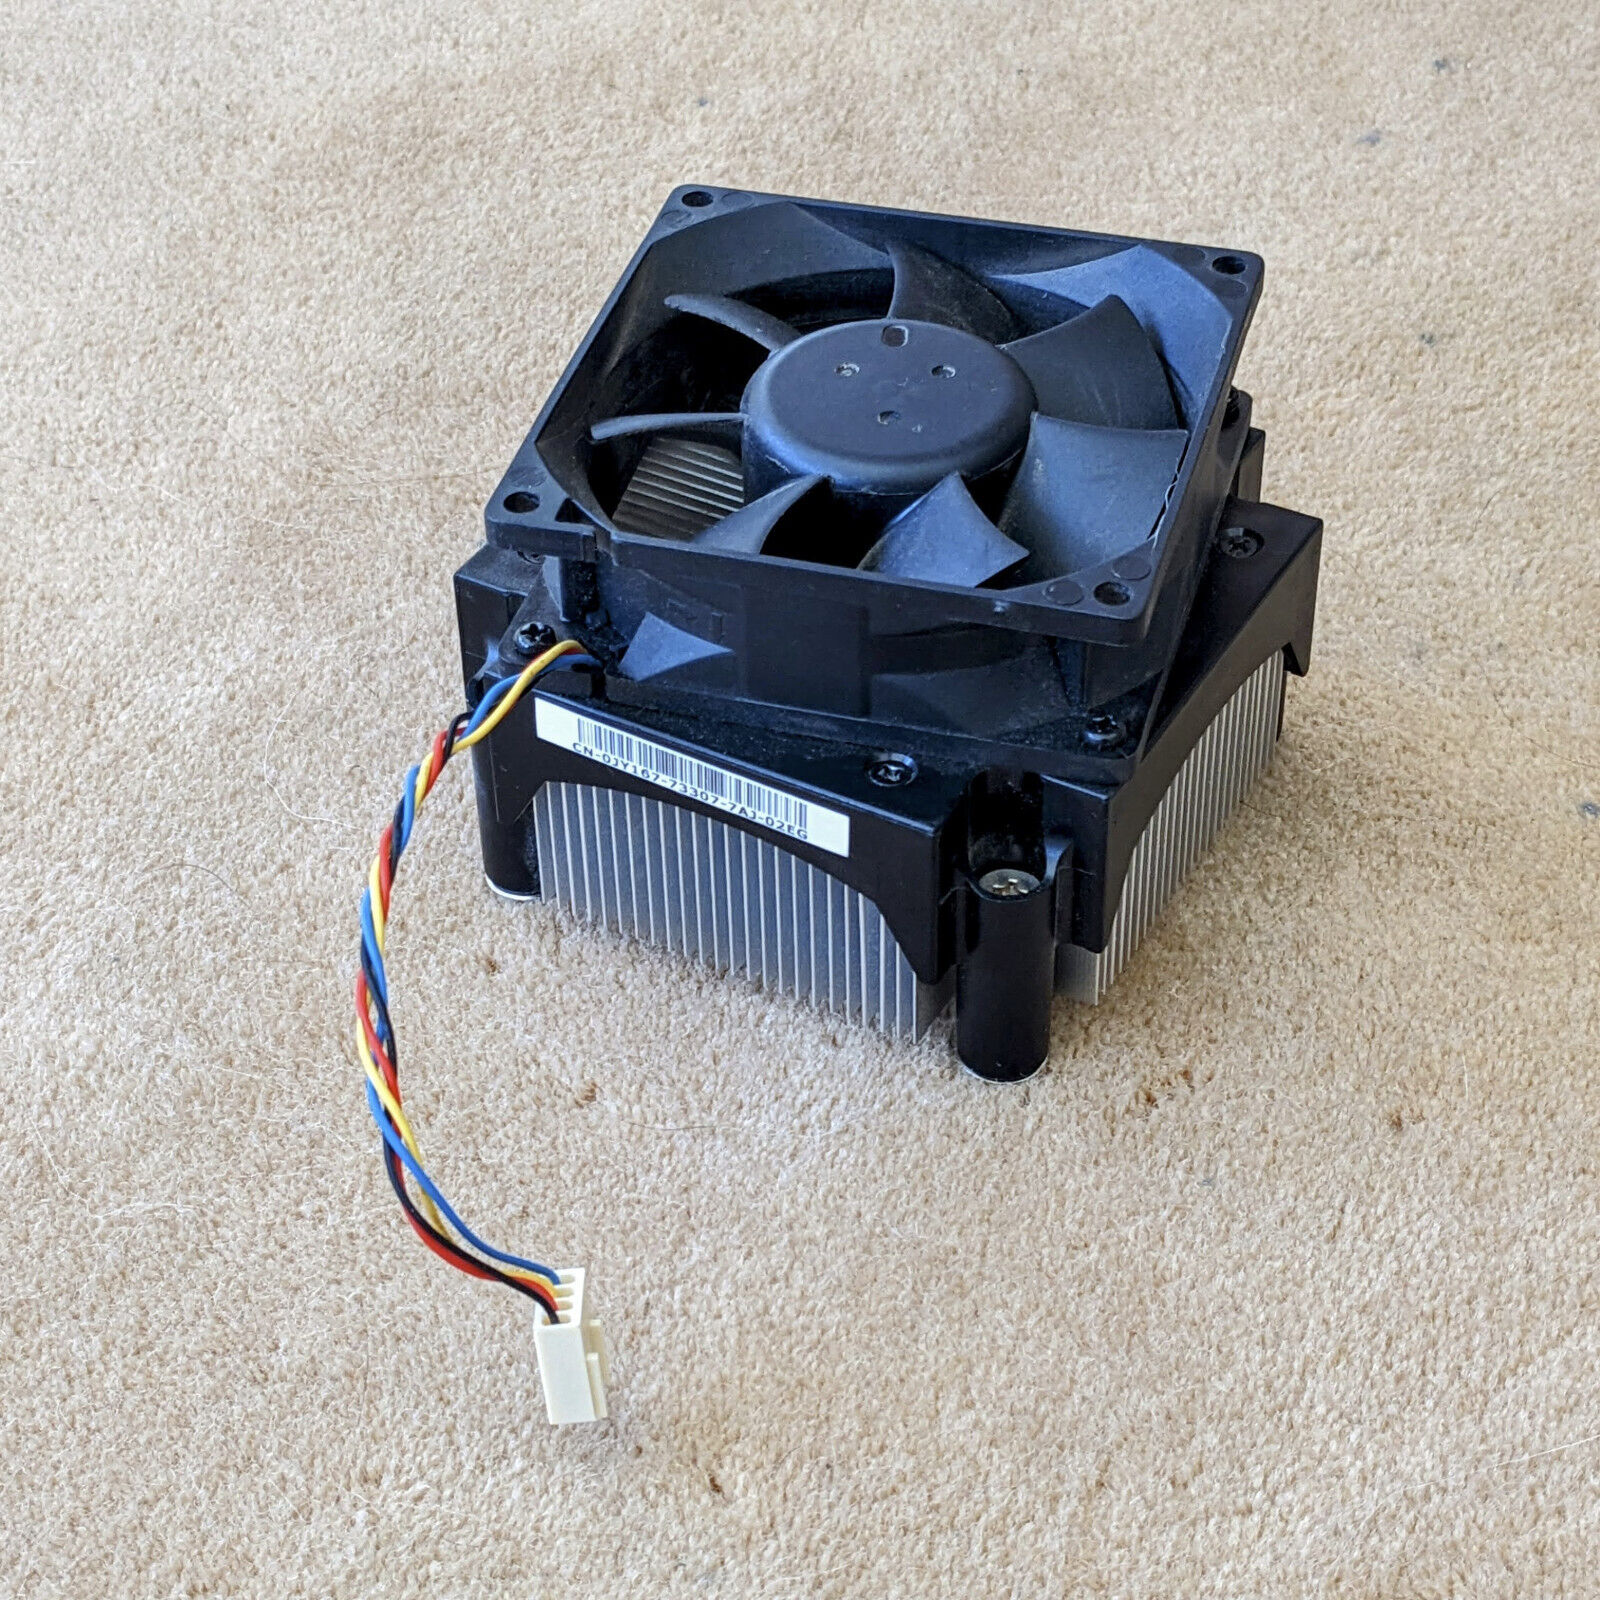 ❄️ [TESTED] CPU Heatsink Cooler w/ 4-Pin Fan | Model # 0JY167 | For Vintage DELL